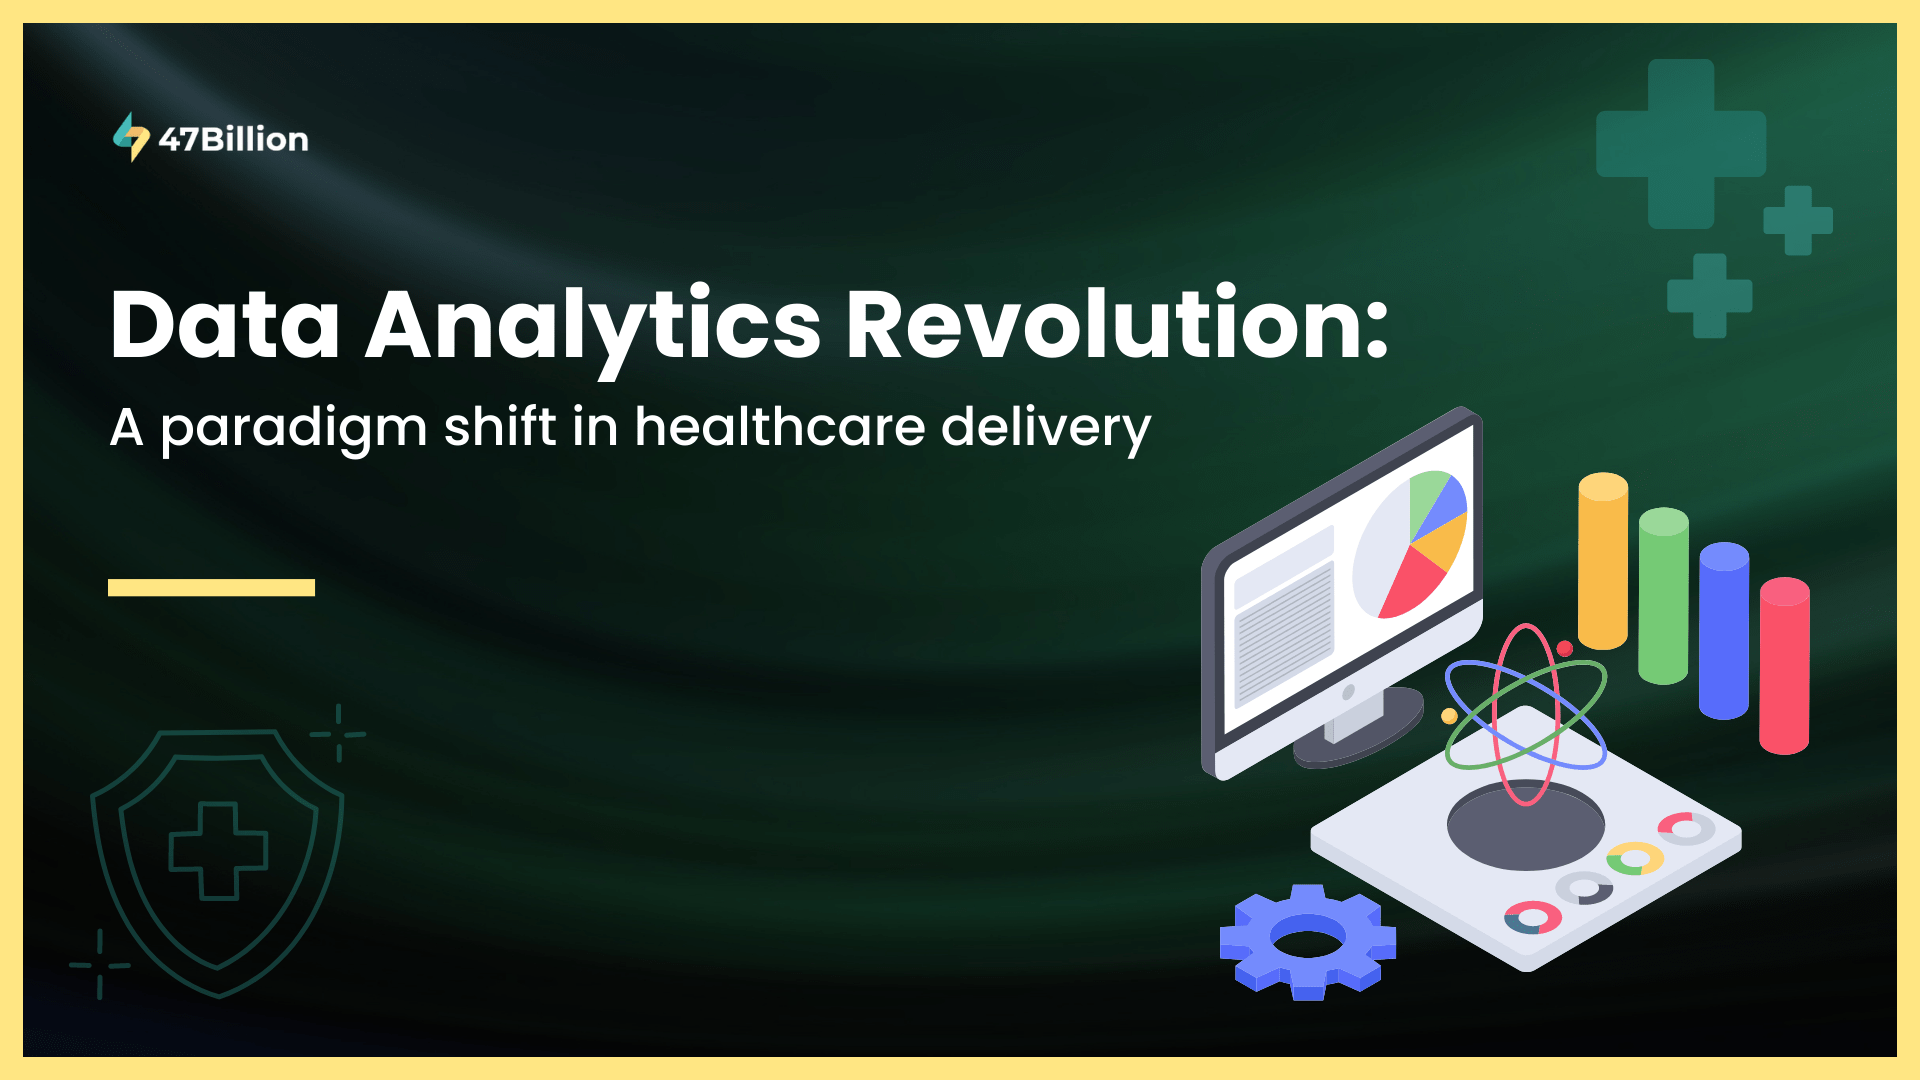 Data-Analytics-Revolution-A-Paradigm-Shift-in-Healthcare-Delivery-47Billion